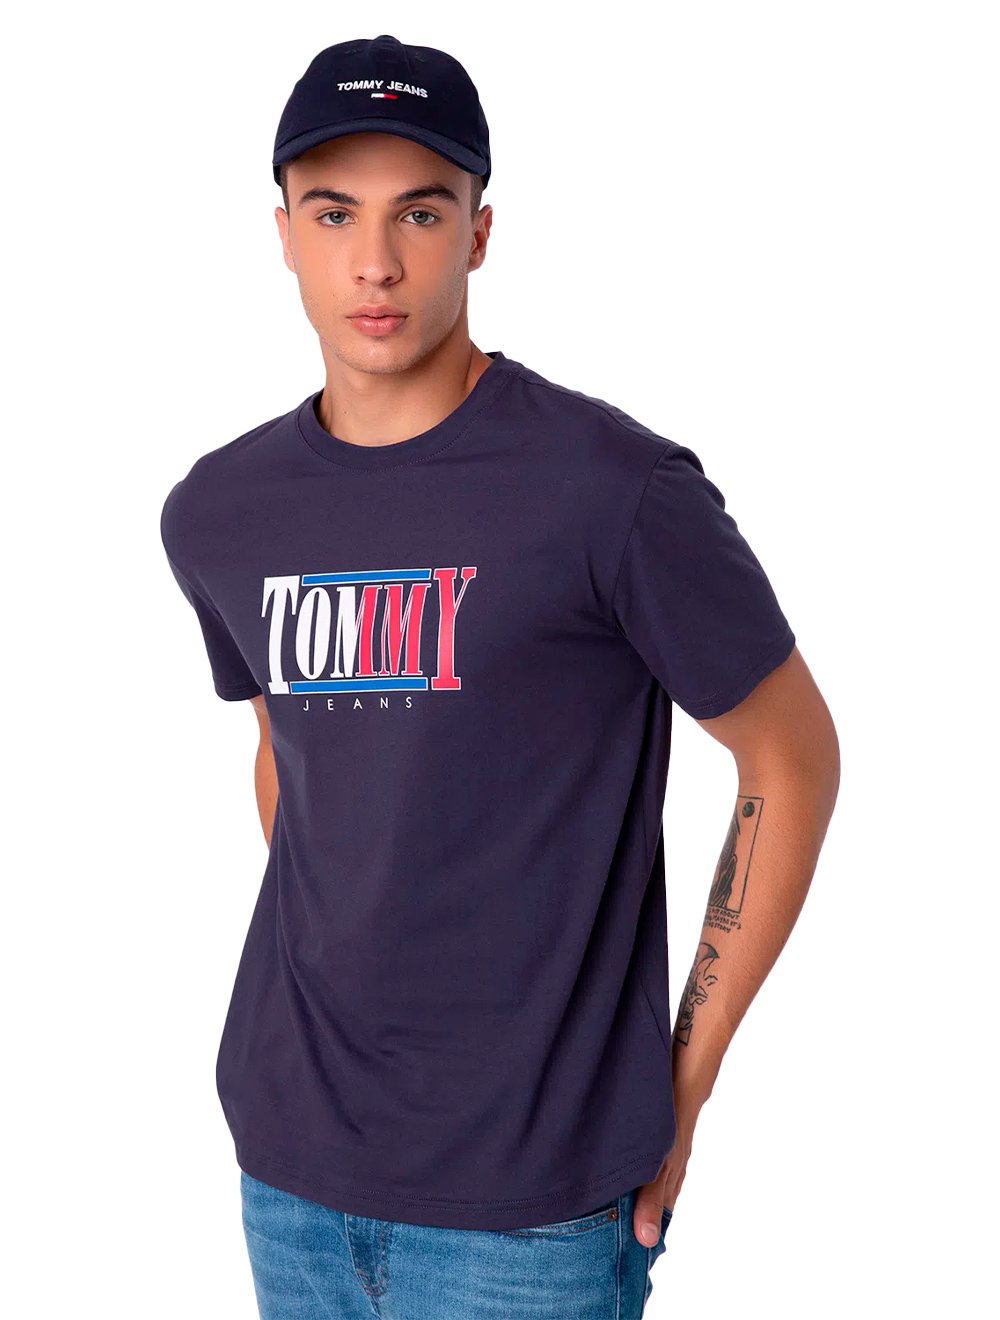 Camiseta Tommy Jeans RWB Centered Logo Azul Marinho